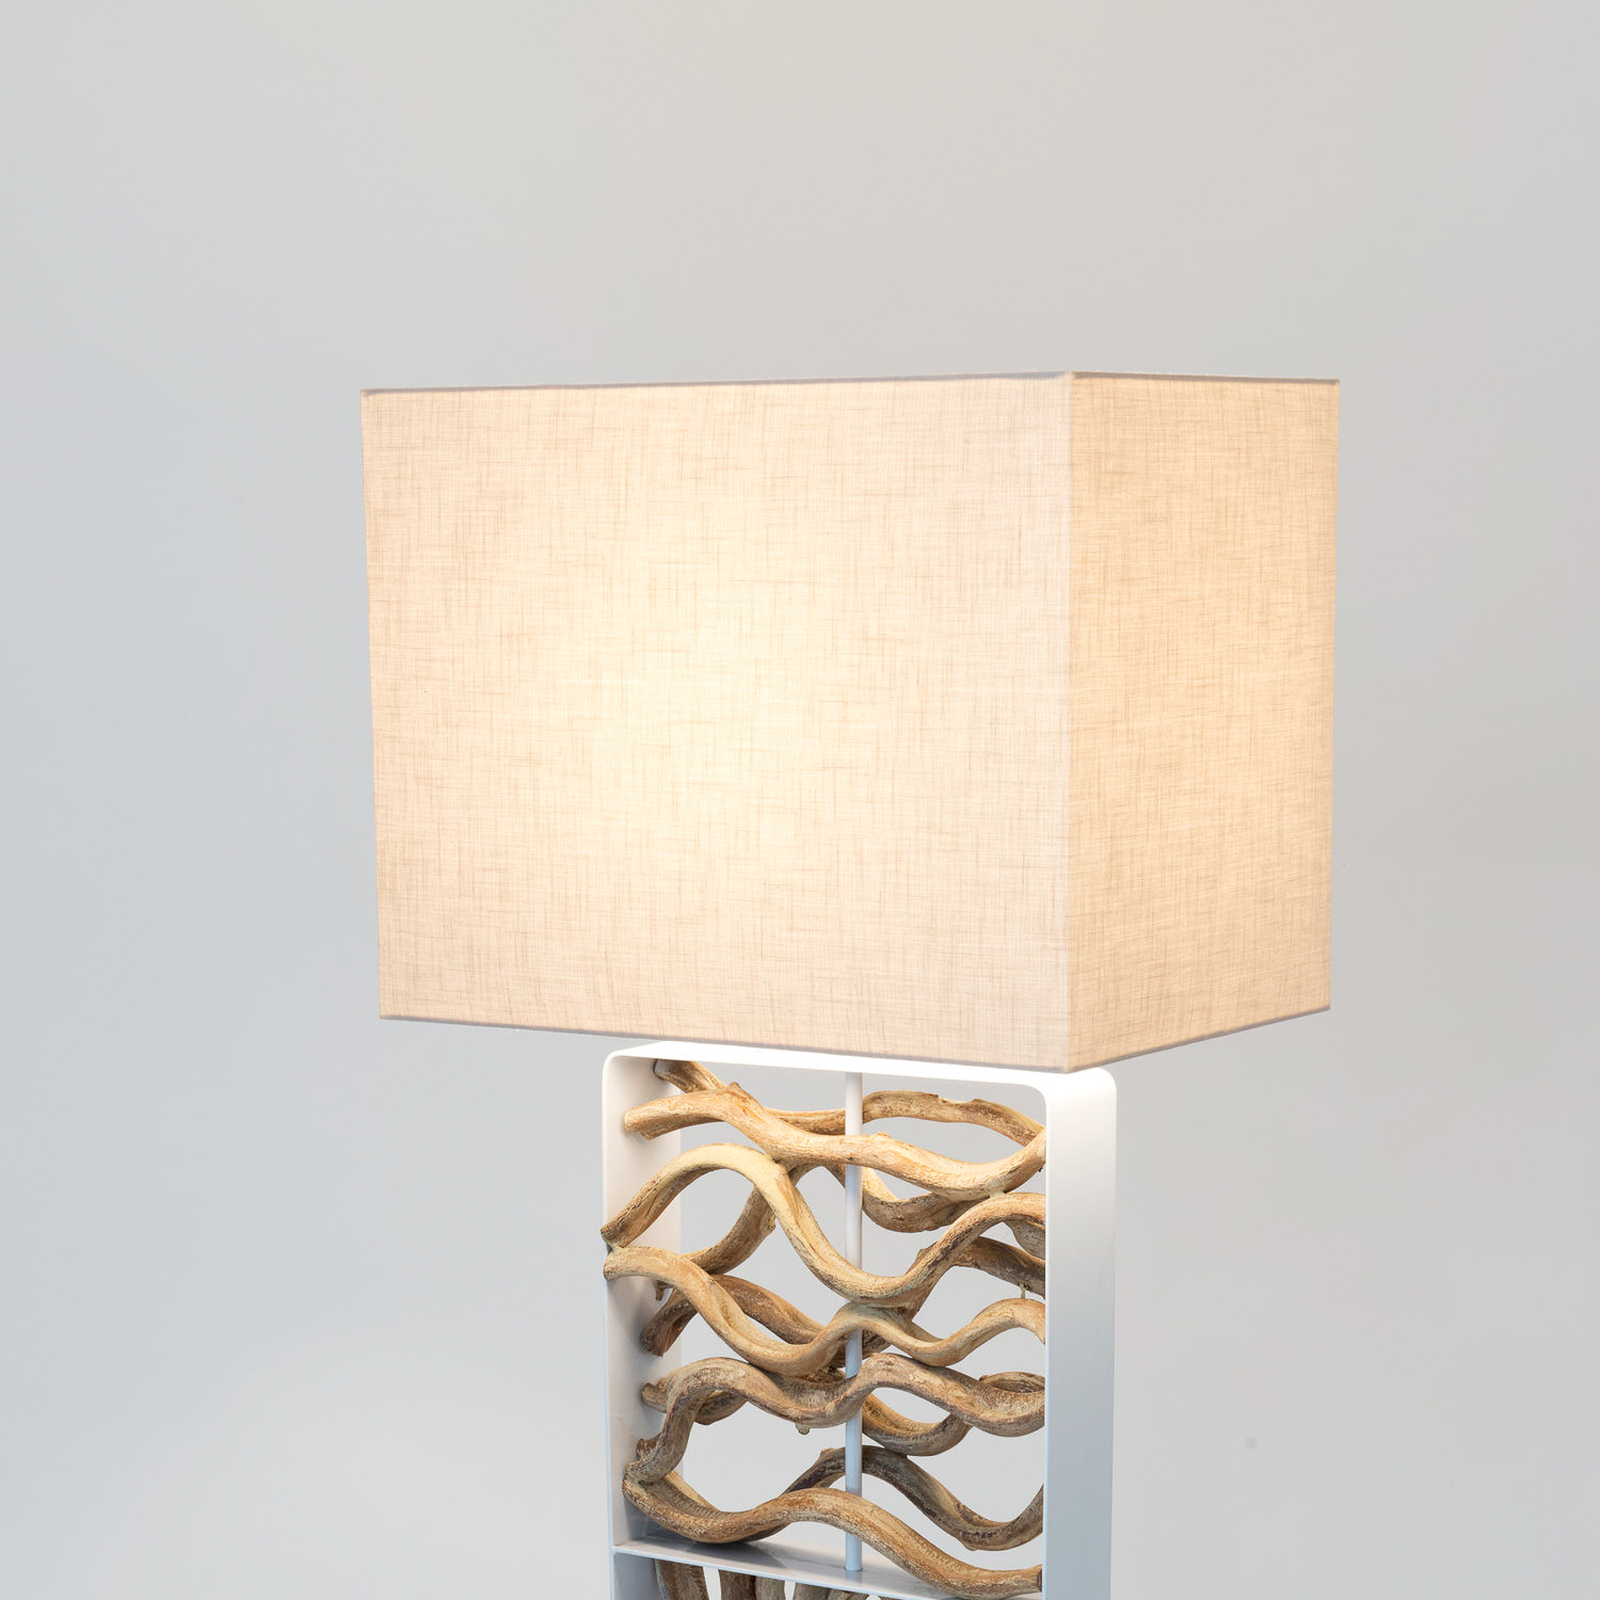 Tremiti floor lamp, wood-coloured/beige, height 160 cm, wood